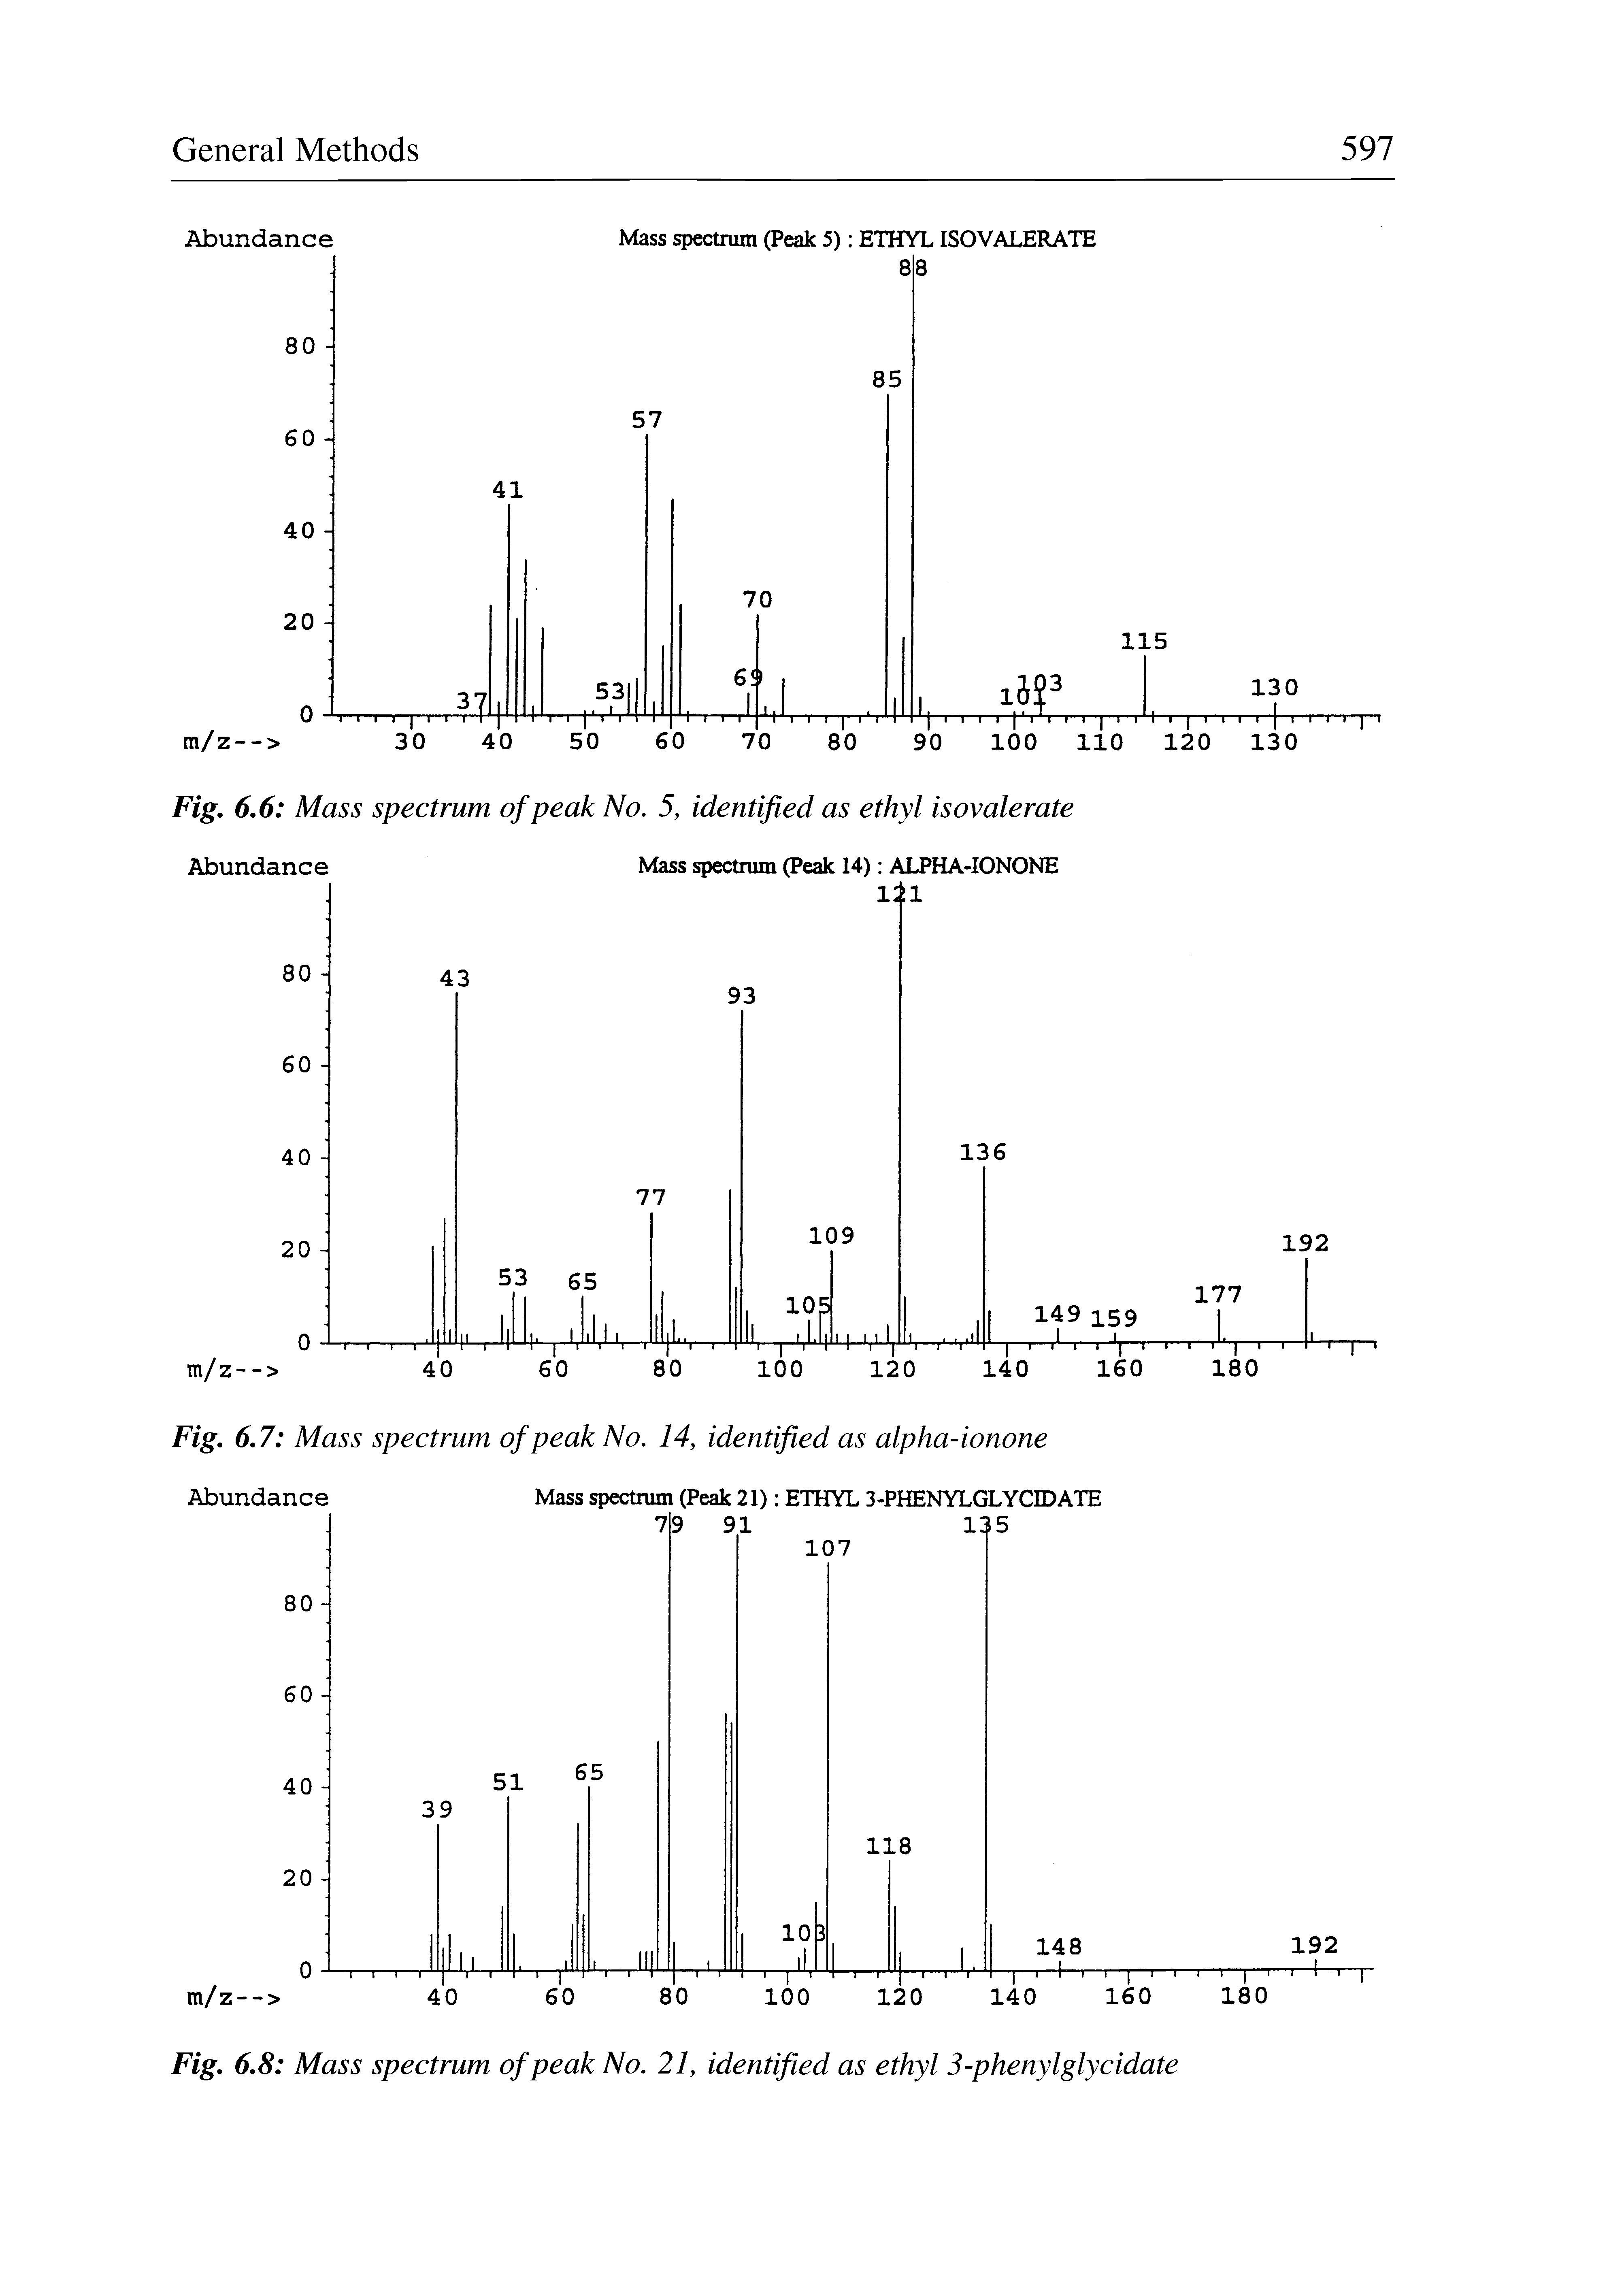 Fig. 6. 7 Mass spectrum of peak No. 14, identified as alpha-ionone...